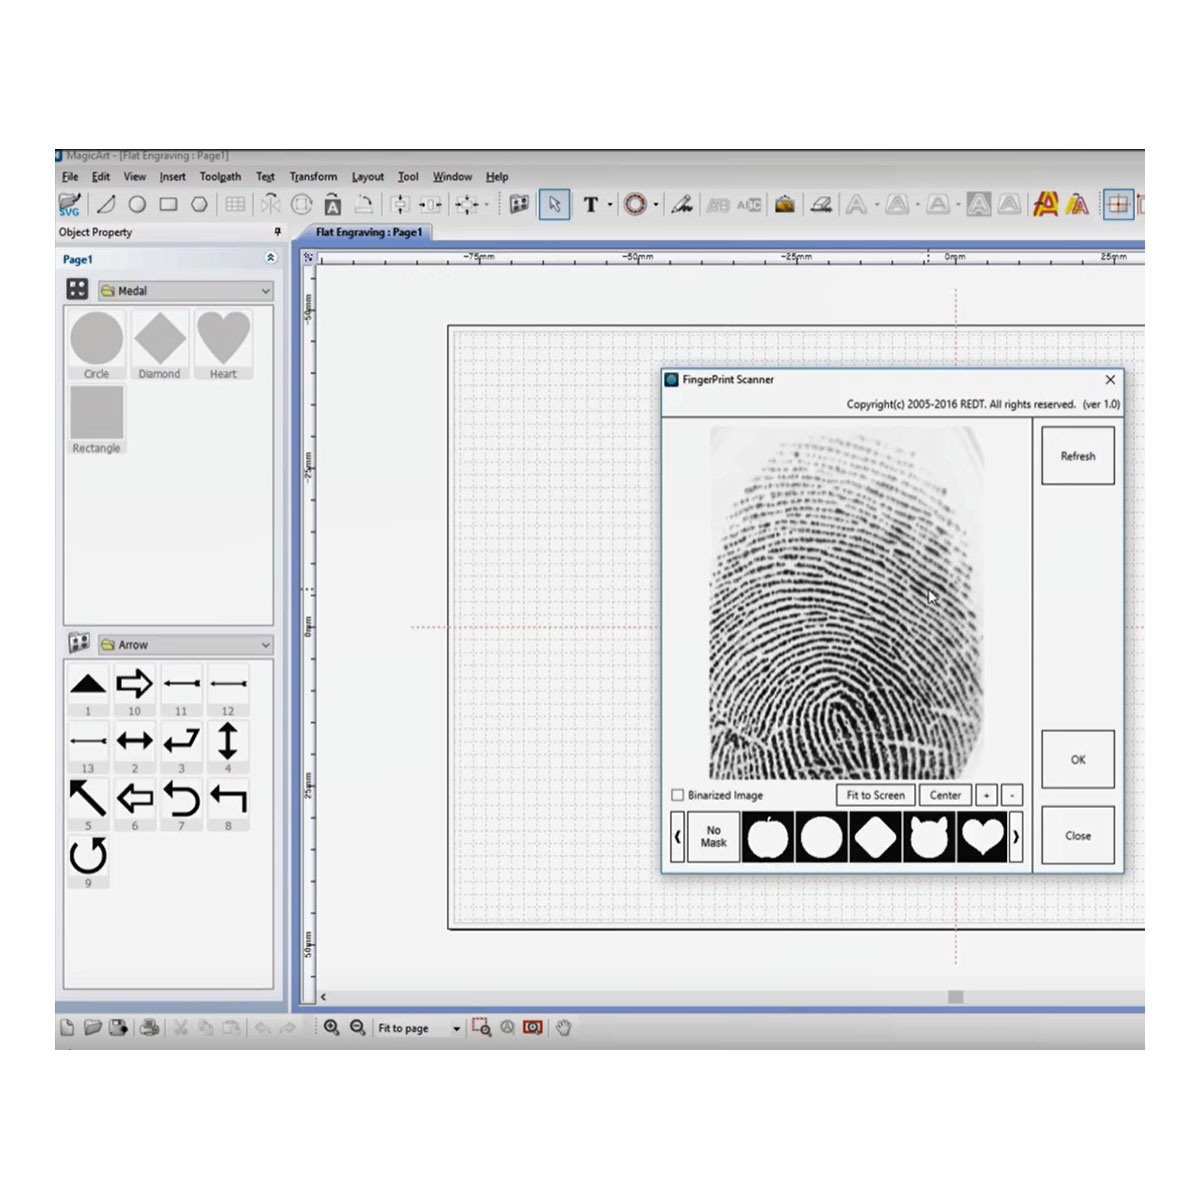 Fingerprint Image Scanner